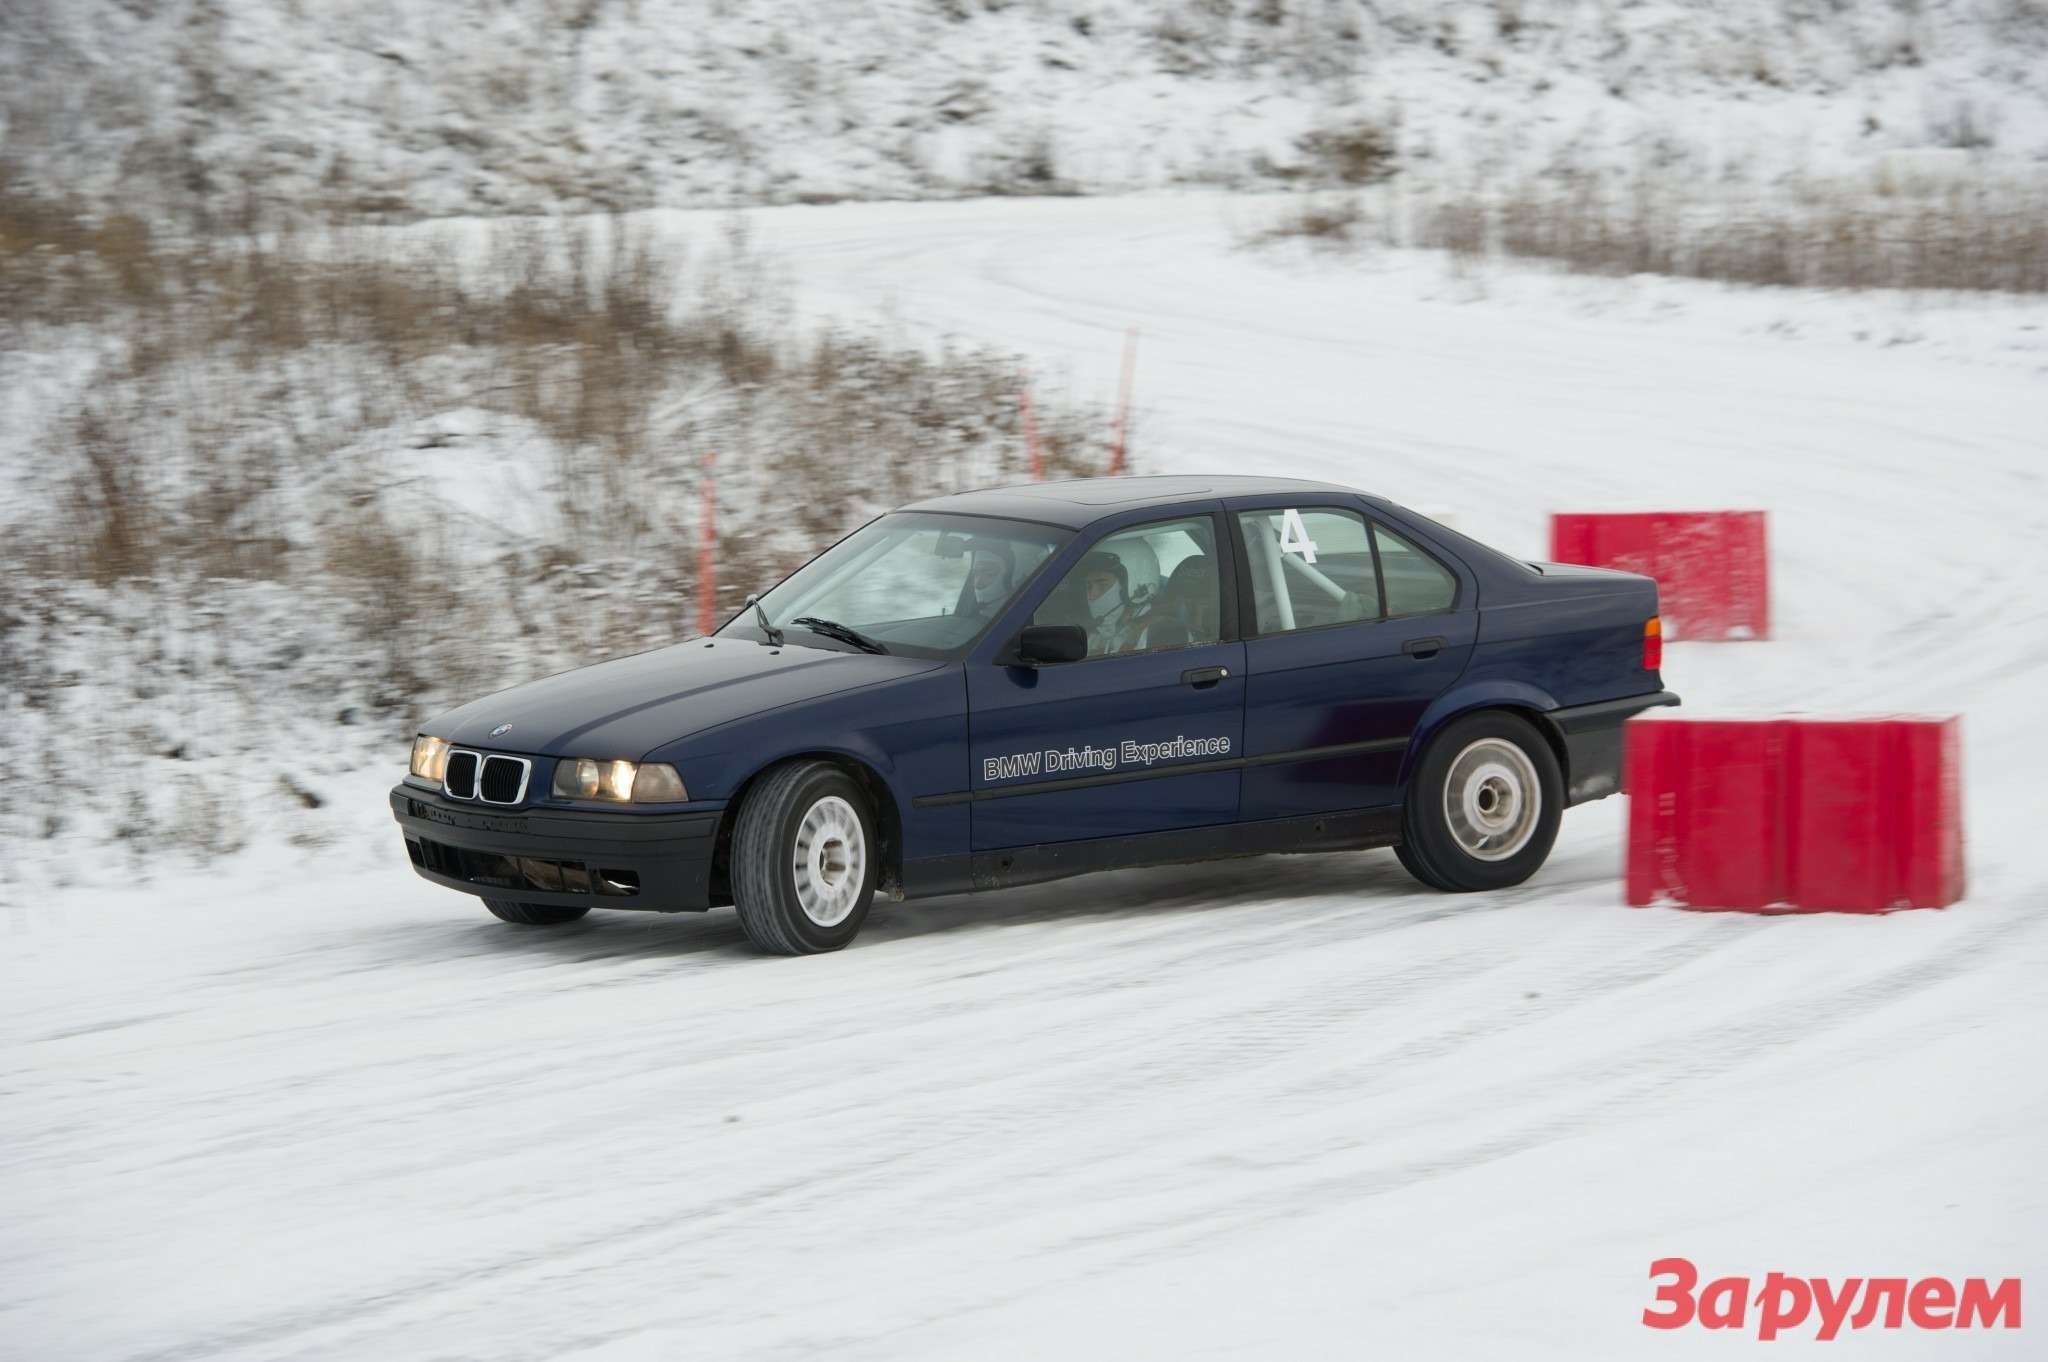 BMW xDrive to Rally (144)